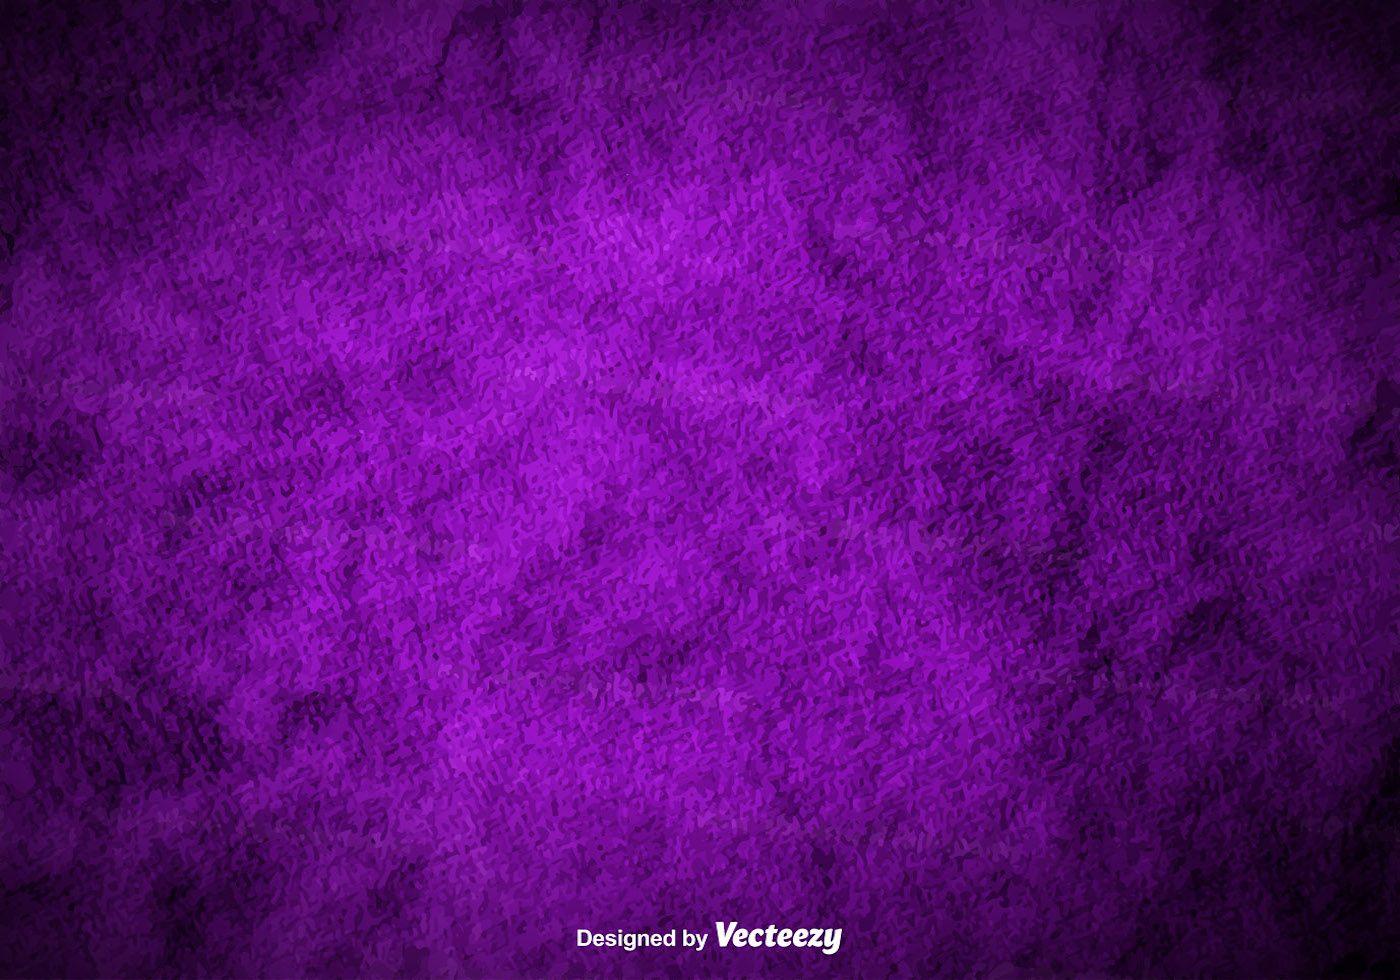 Purple Background Design - (41708 Free Downloads)